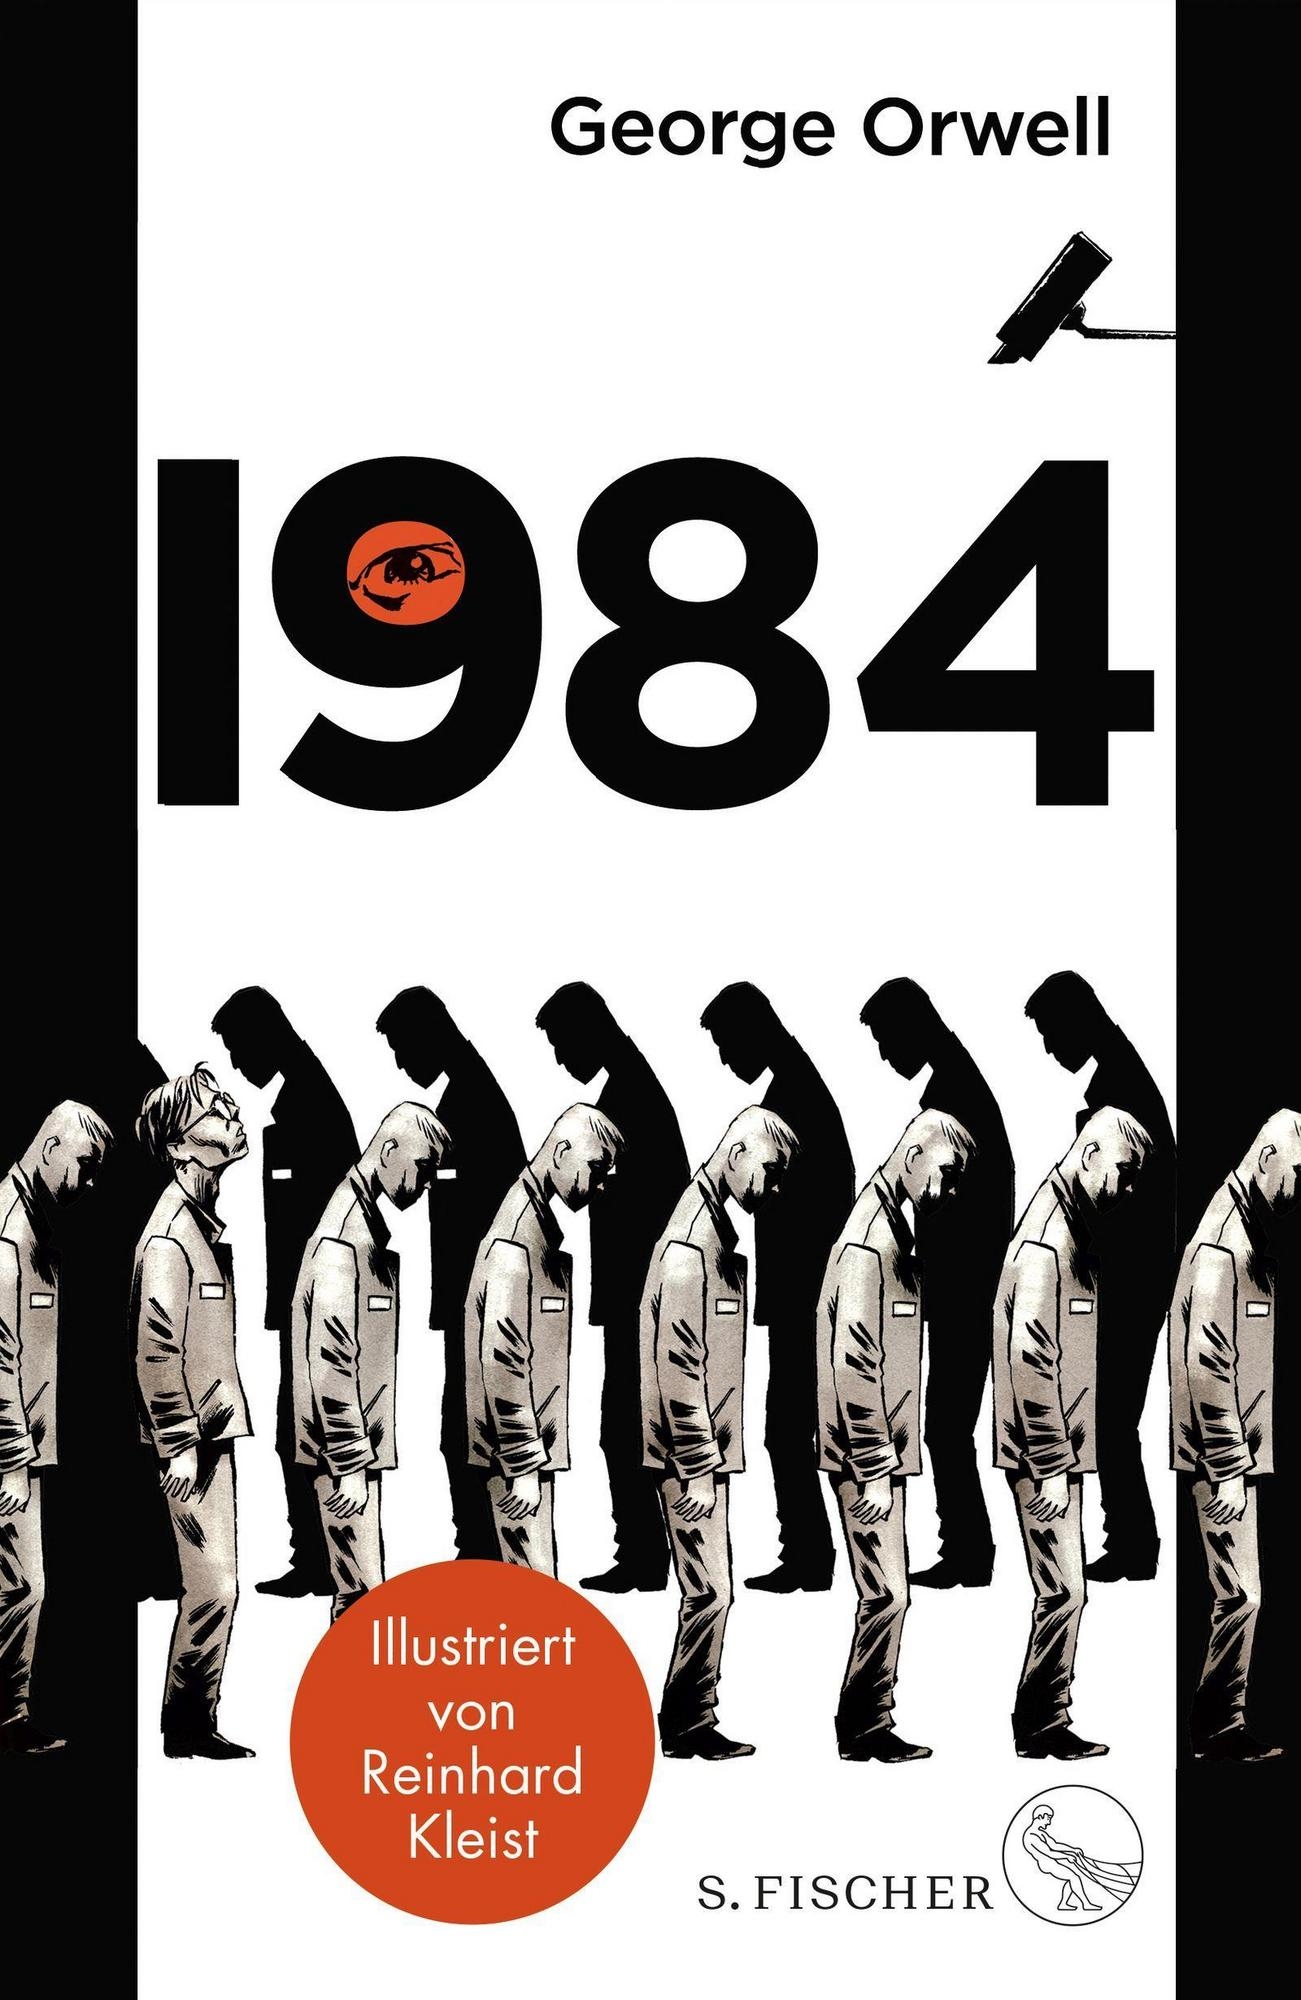 book special 03 21 George Orwell 1984 kleist